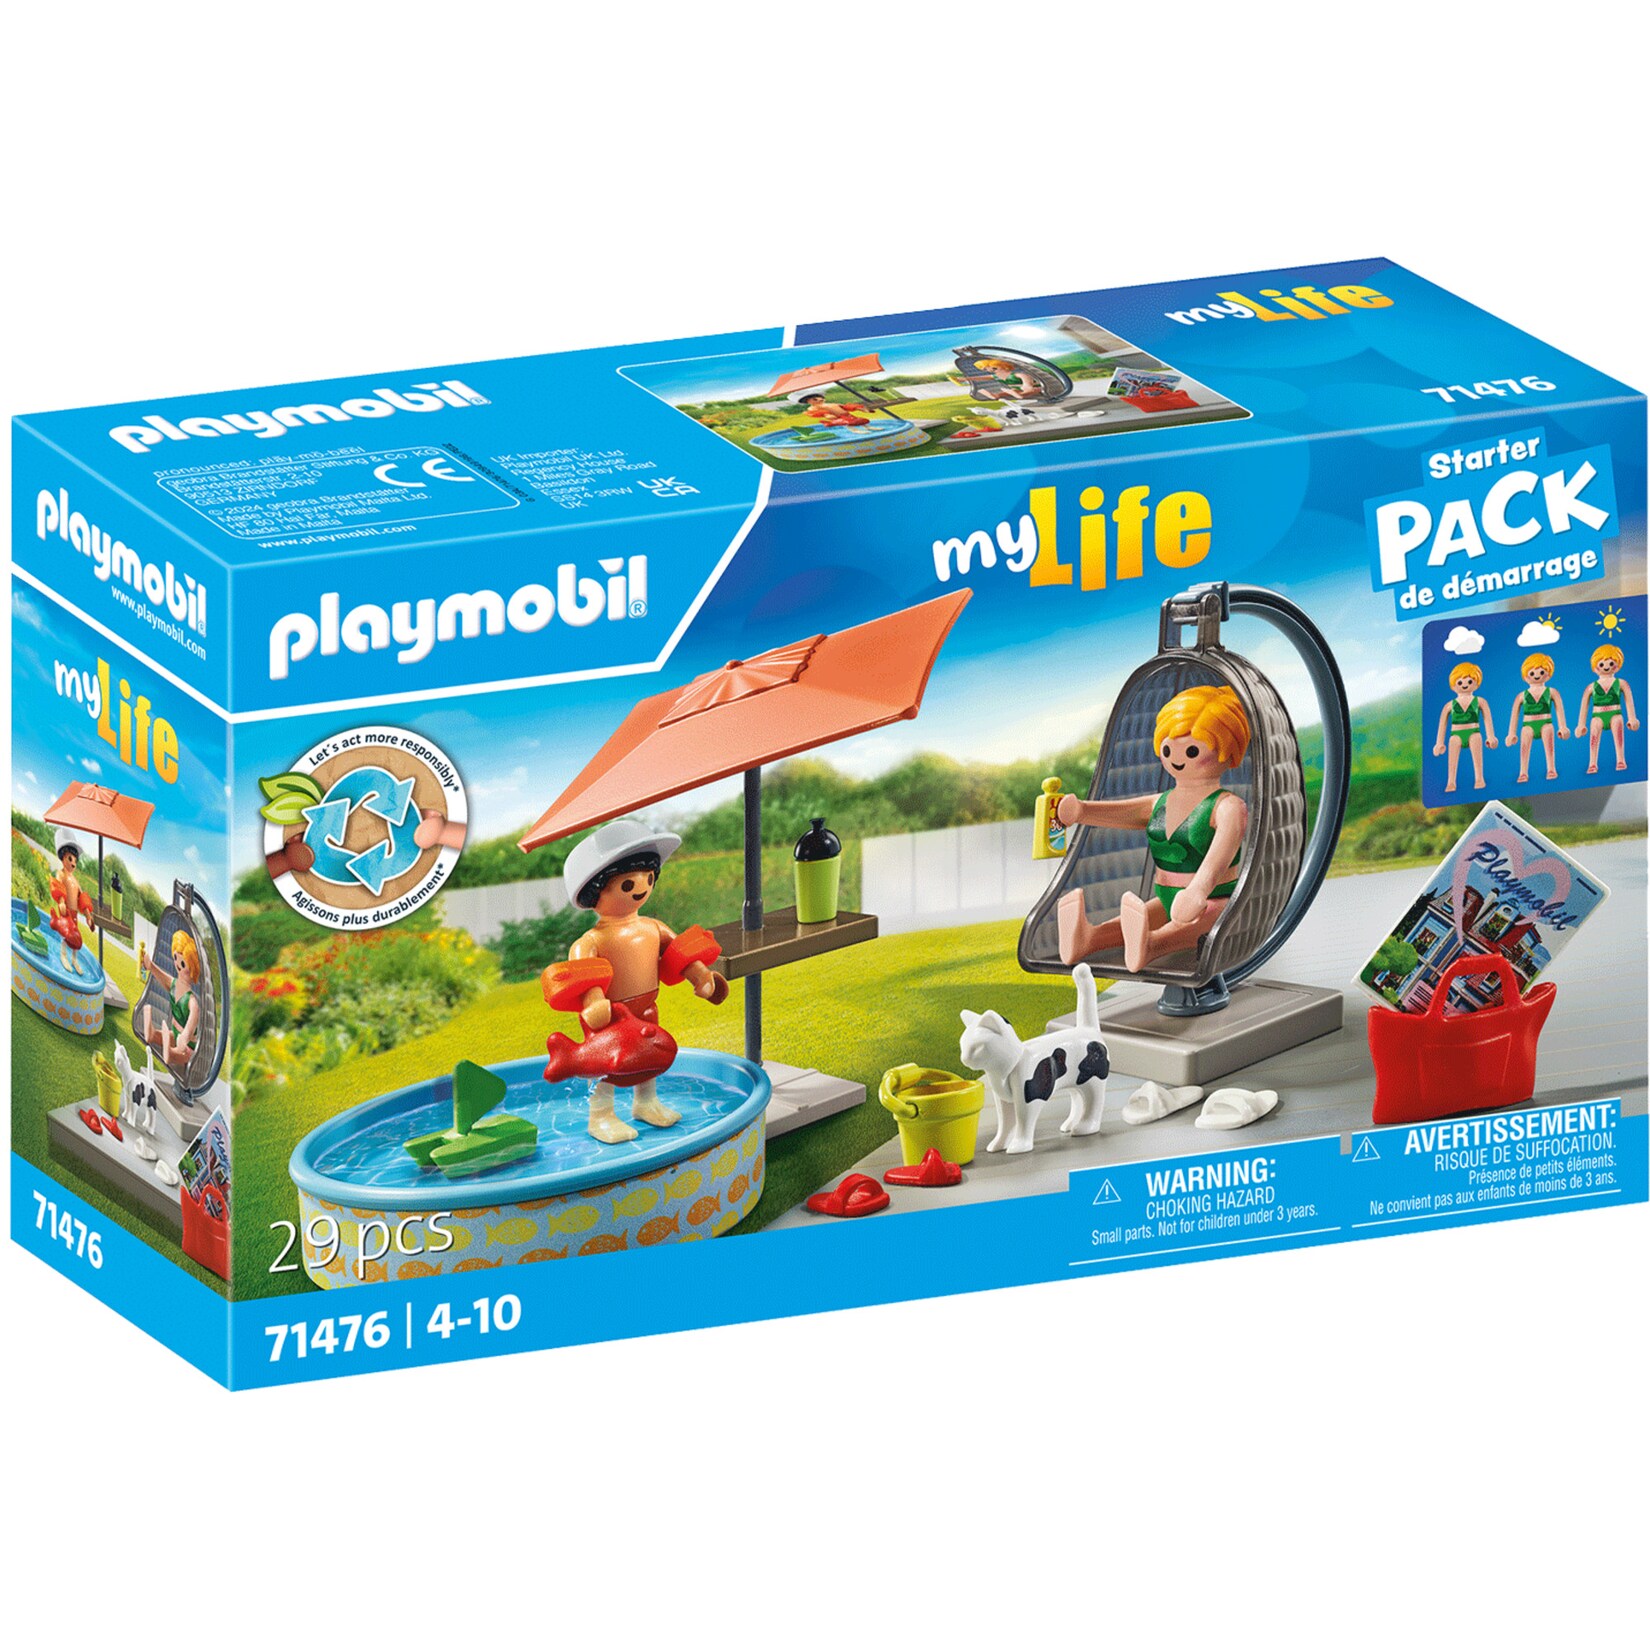 PLAYMOBIL Konstruktionsspielzeug City Life Starter Pack Planschspaß zu Hause